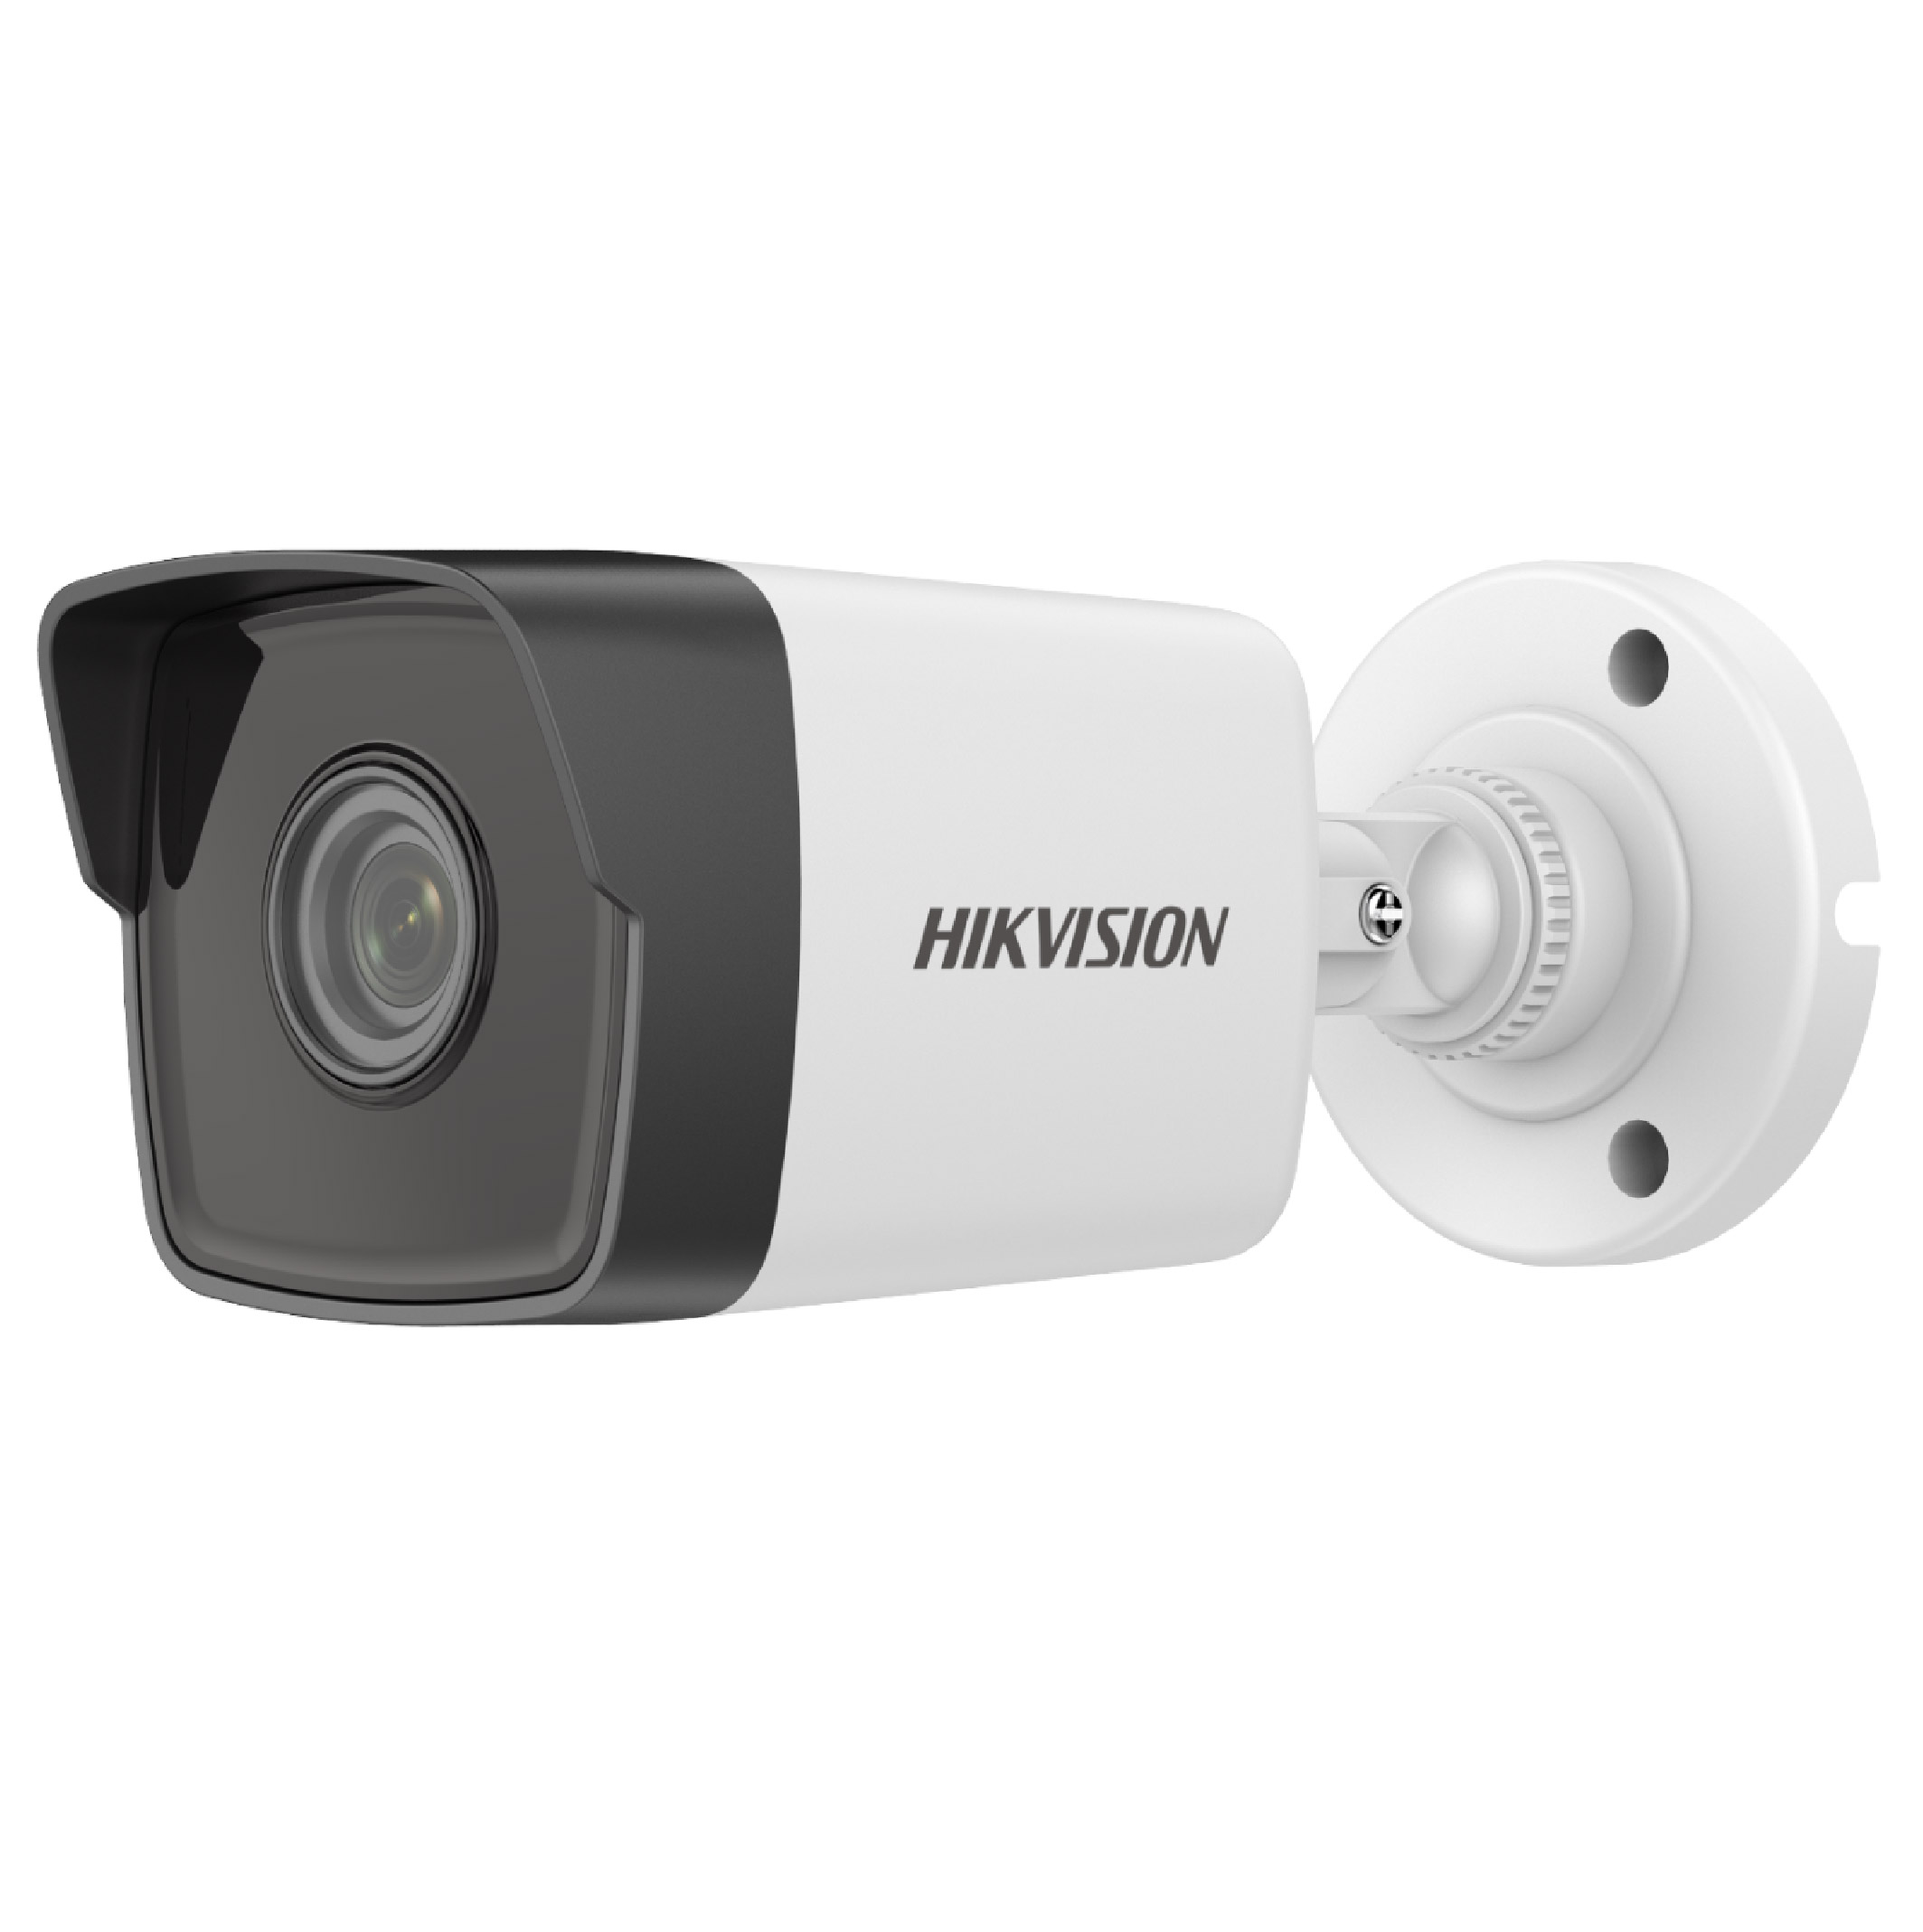 HIKVISION DS-2CD1053G0-I Turbo HD Camera